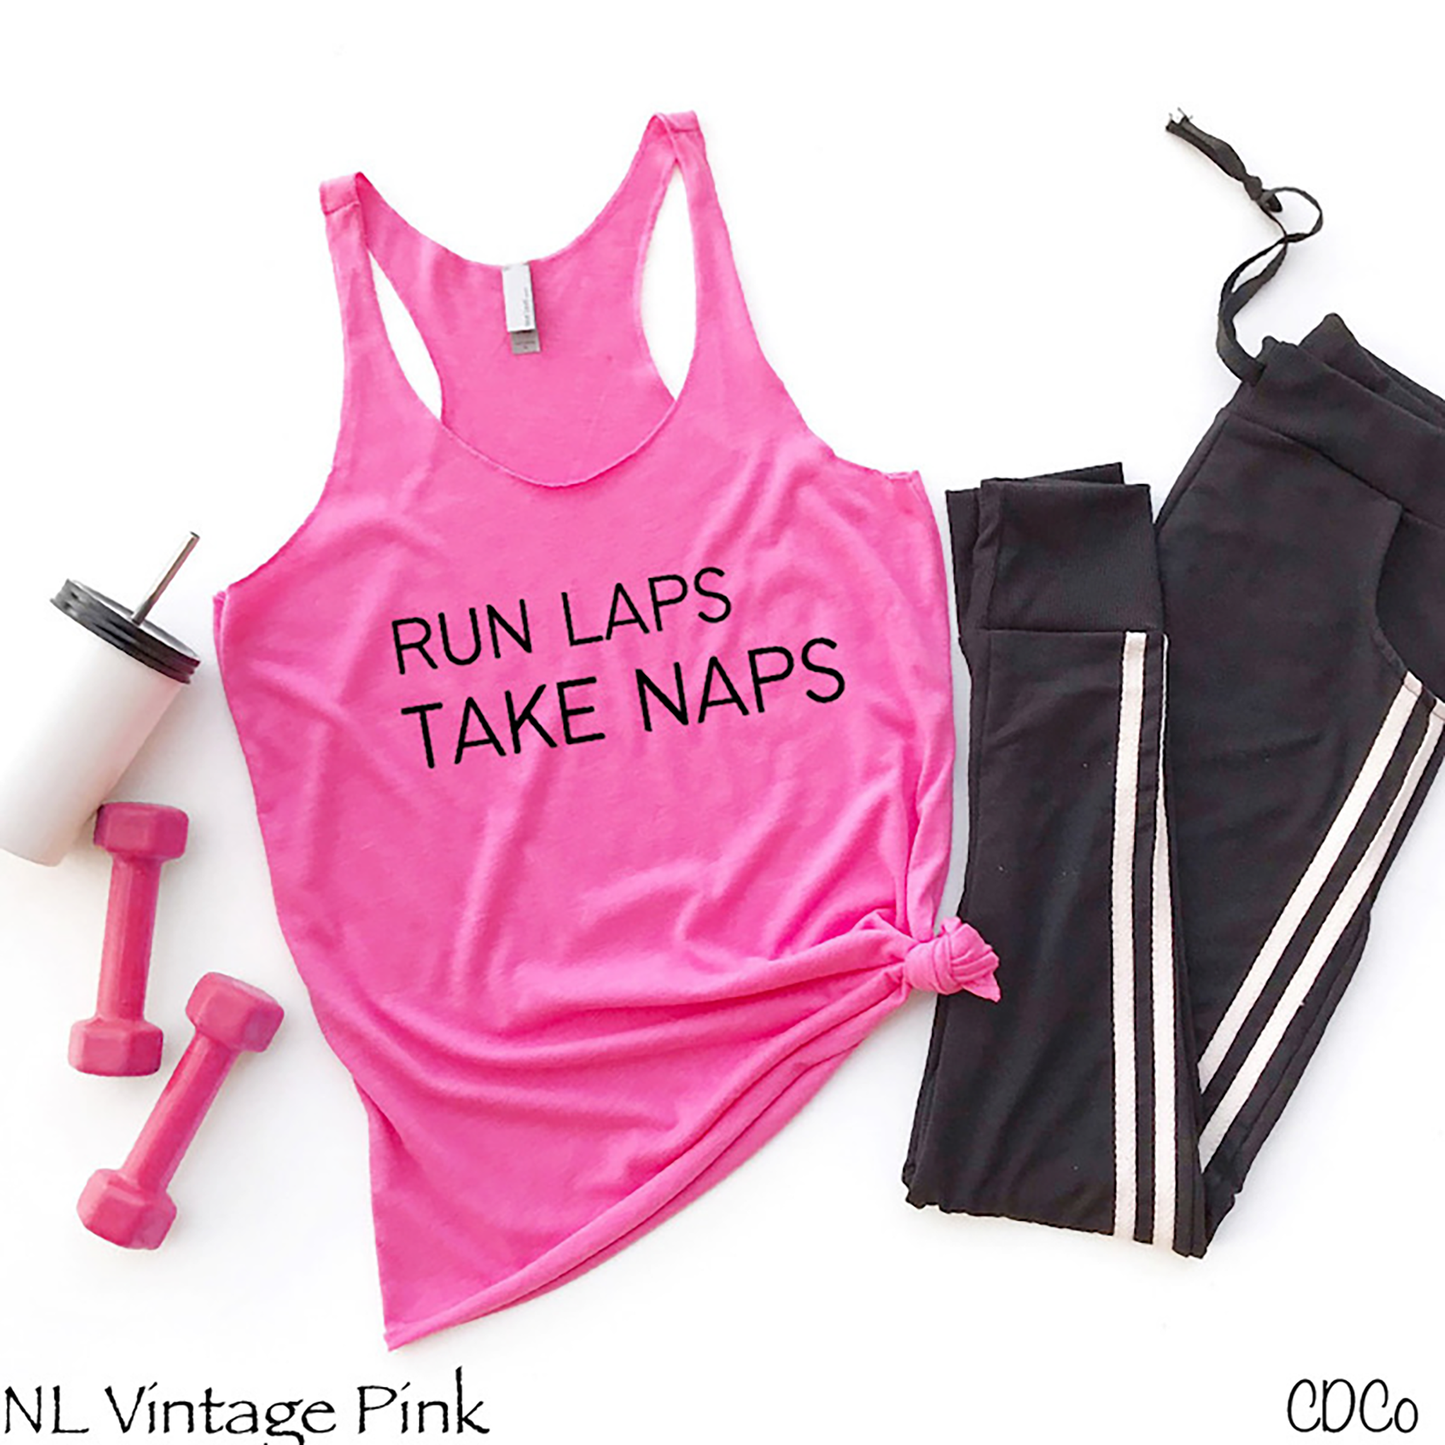 Run Laps Take Naps (325°)